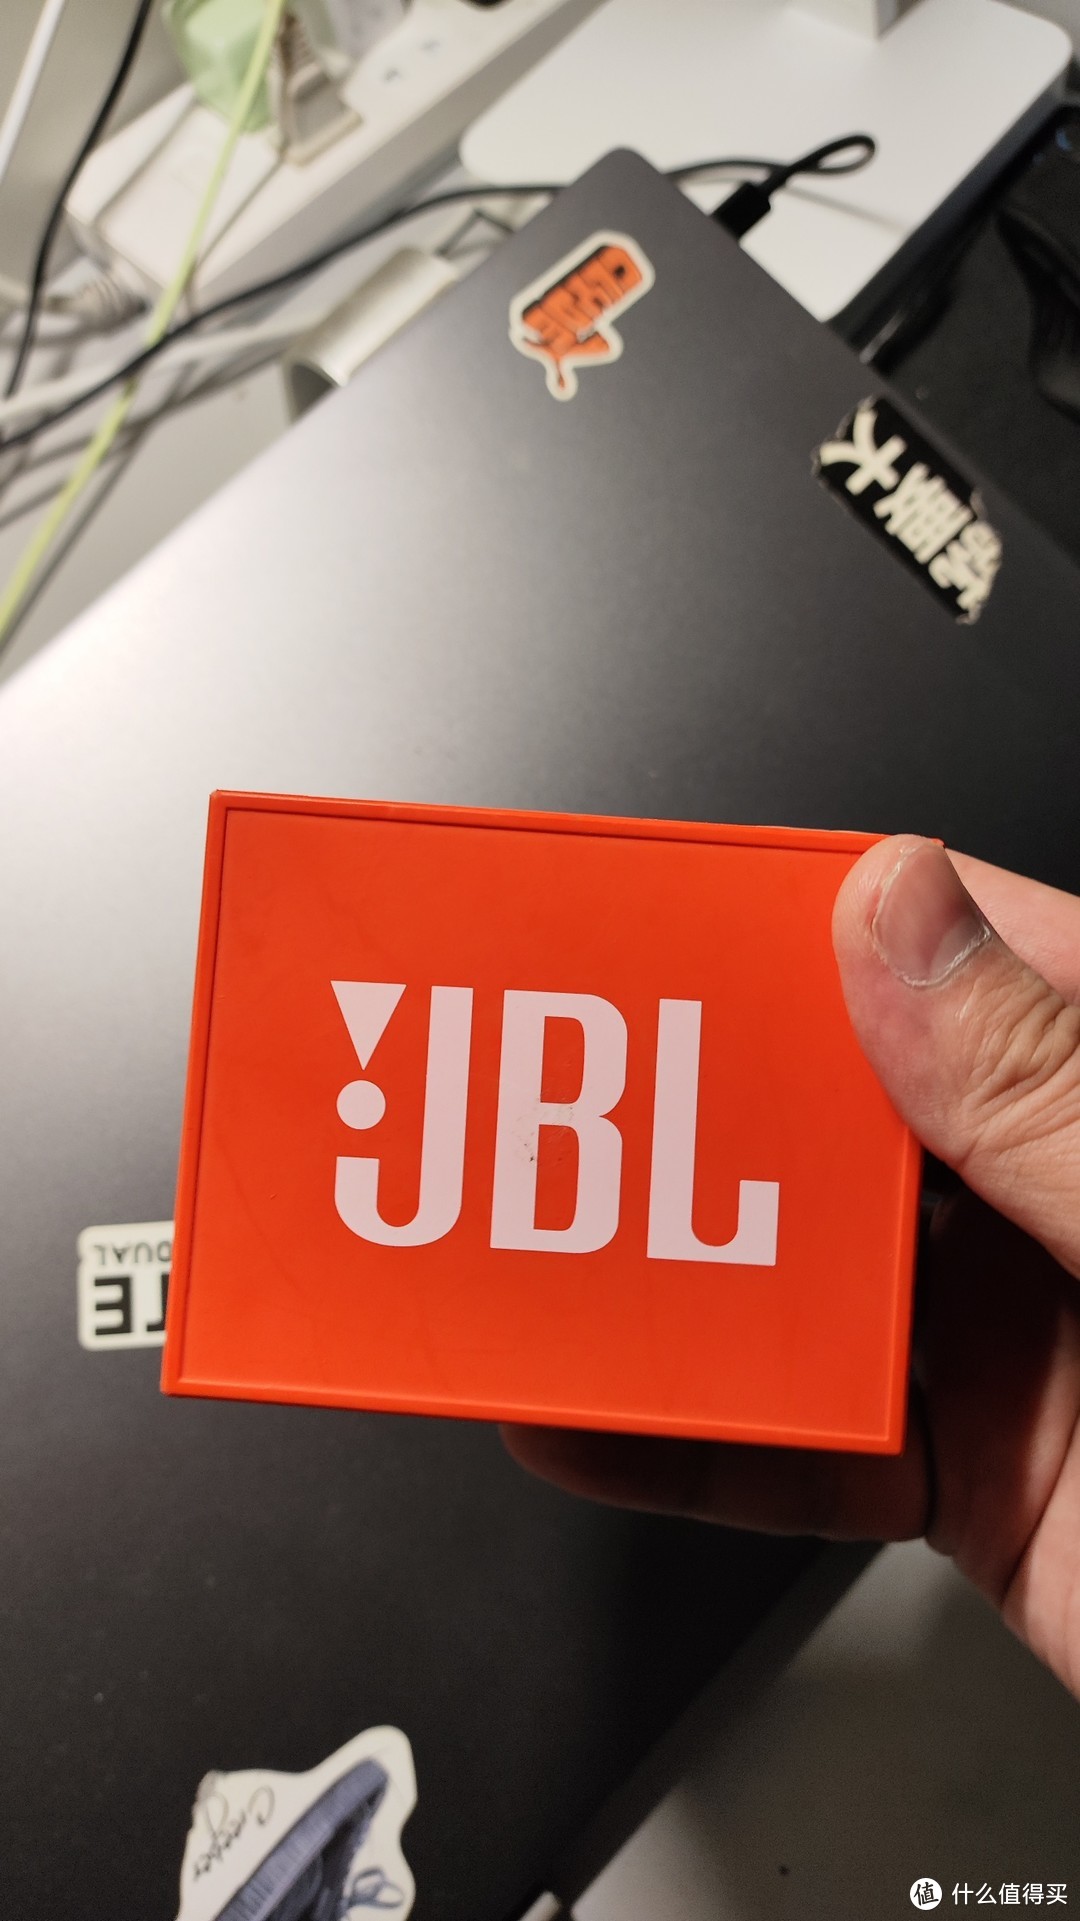 JBL 蓝牙音箱：让你随时随地享受高品质音乐